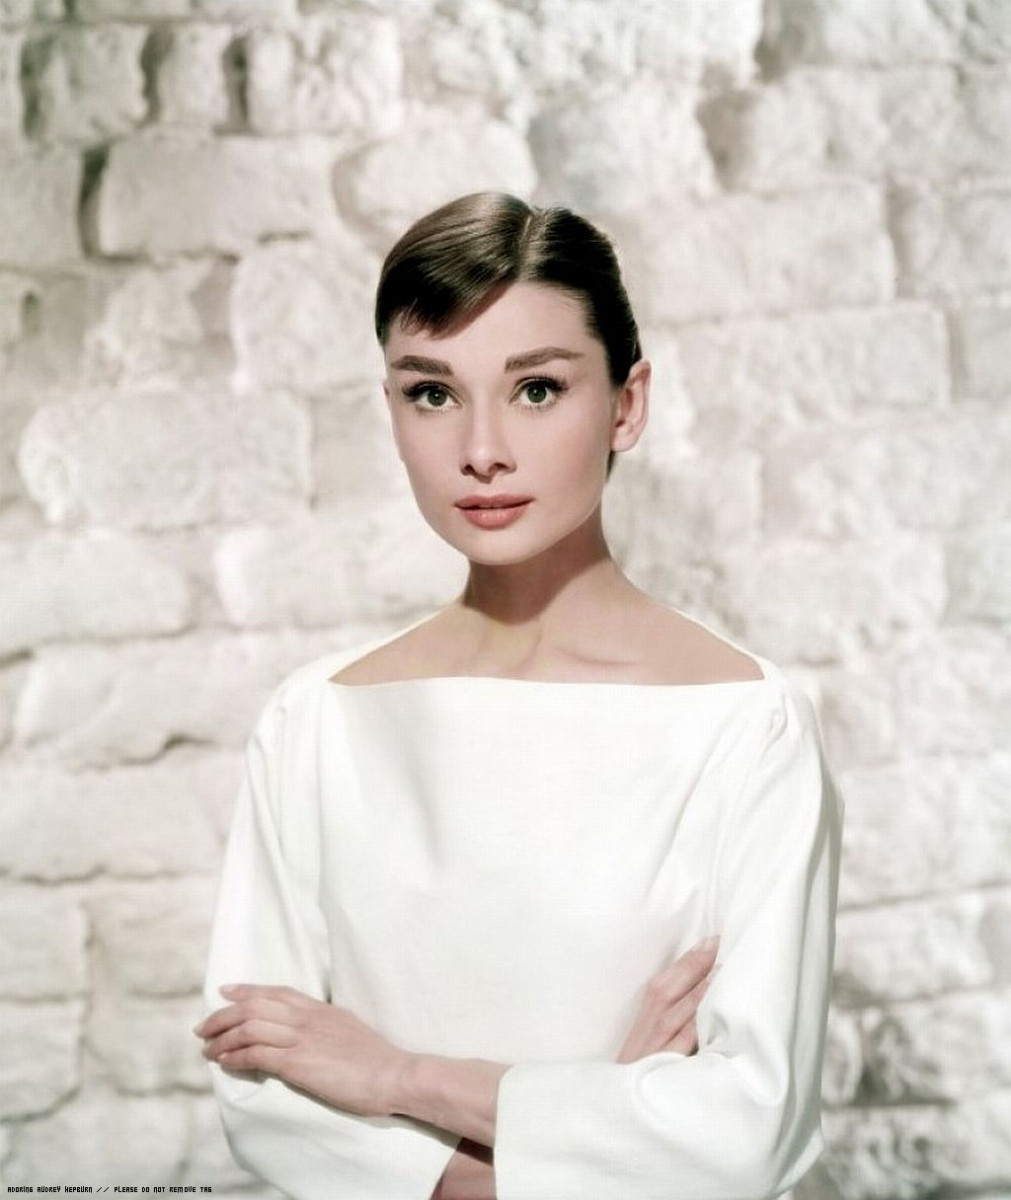 Audrey Hepburn photo 219 of 640 pics, wallpaper - photo #200045 - ThePlace2